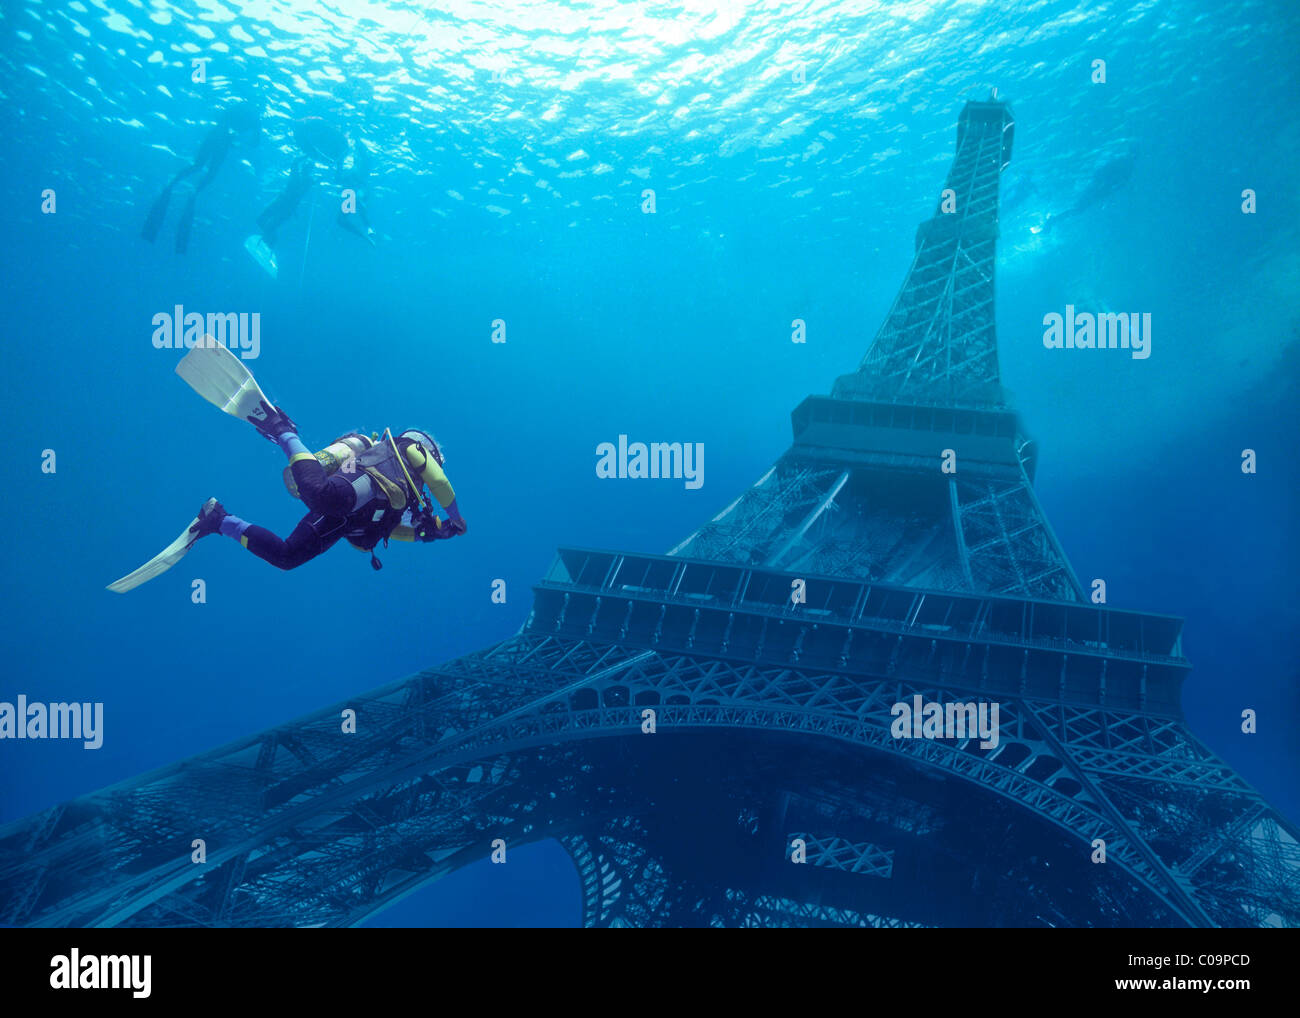 Eiffel Tower under water, symbolic image for future sea level rise Stock Photo